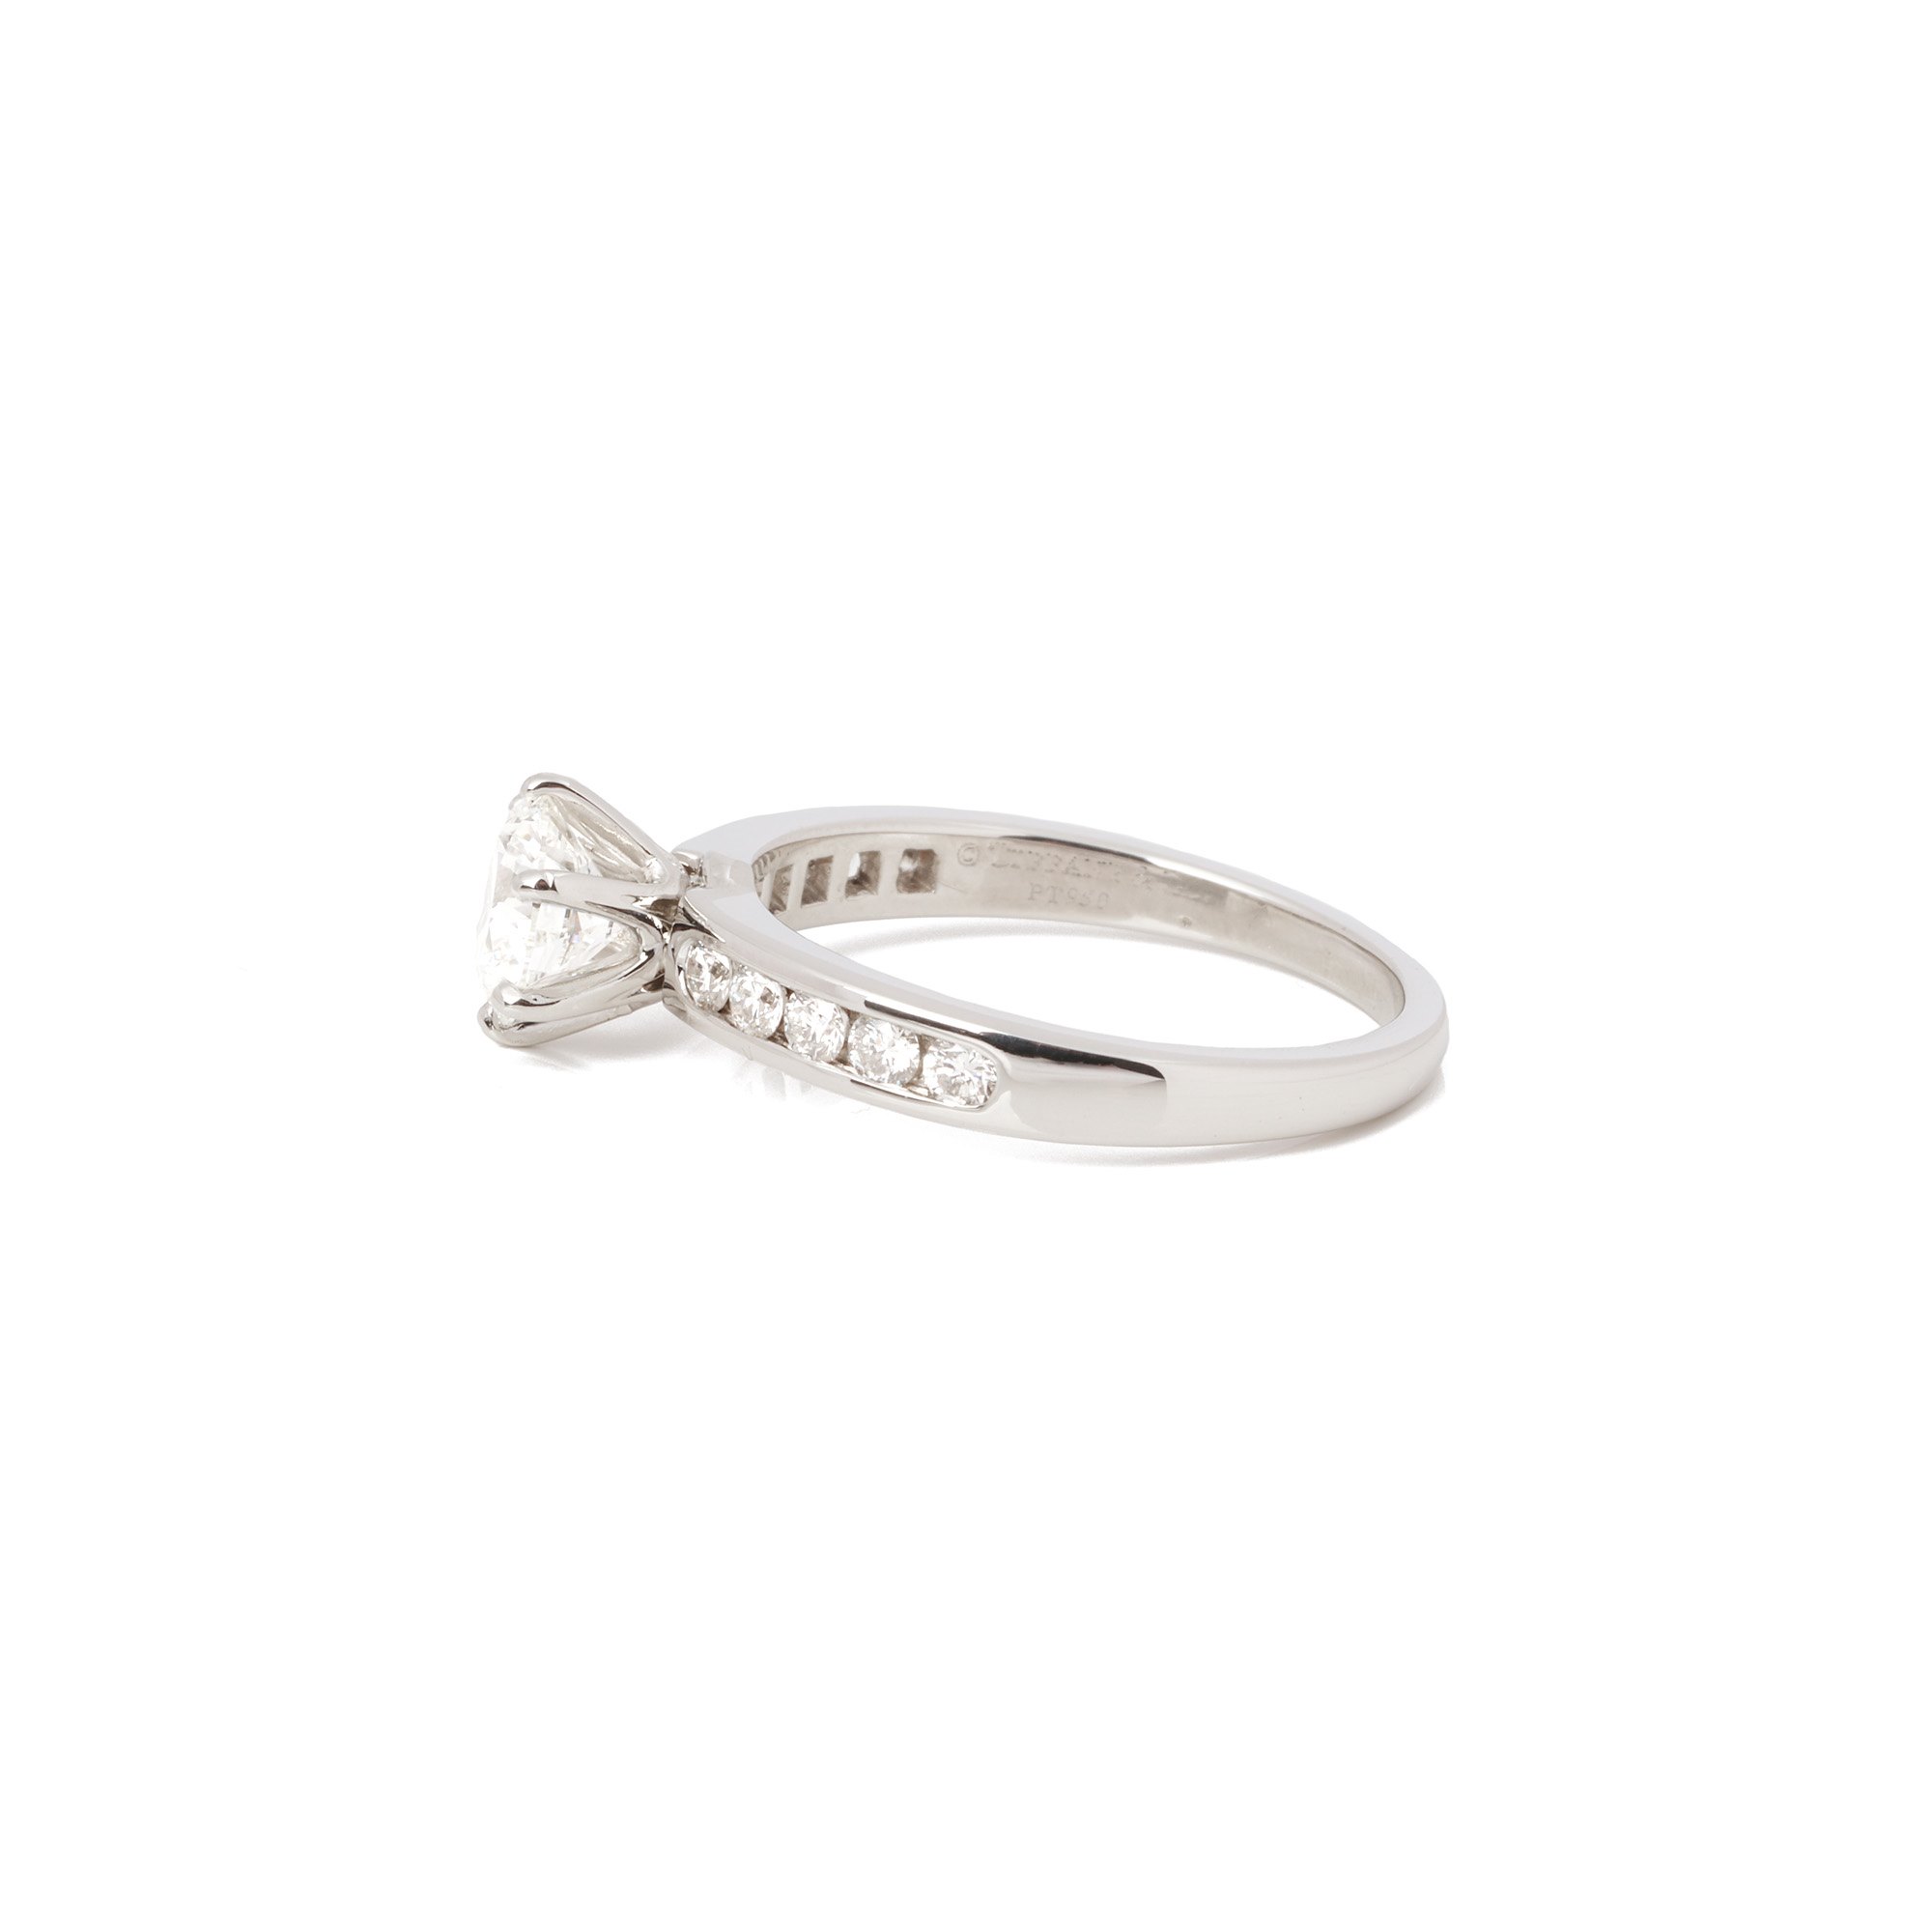 Tiffany & Co. 1.03ct Brilliant Cut Solitaire Ring